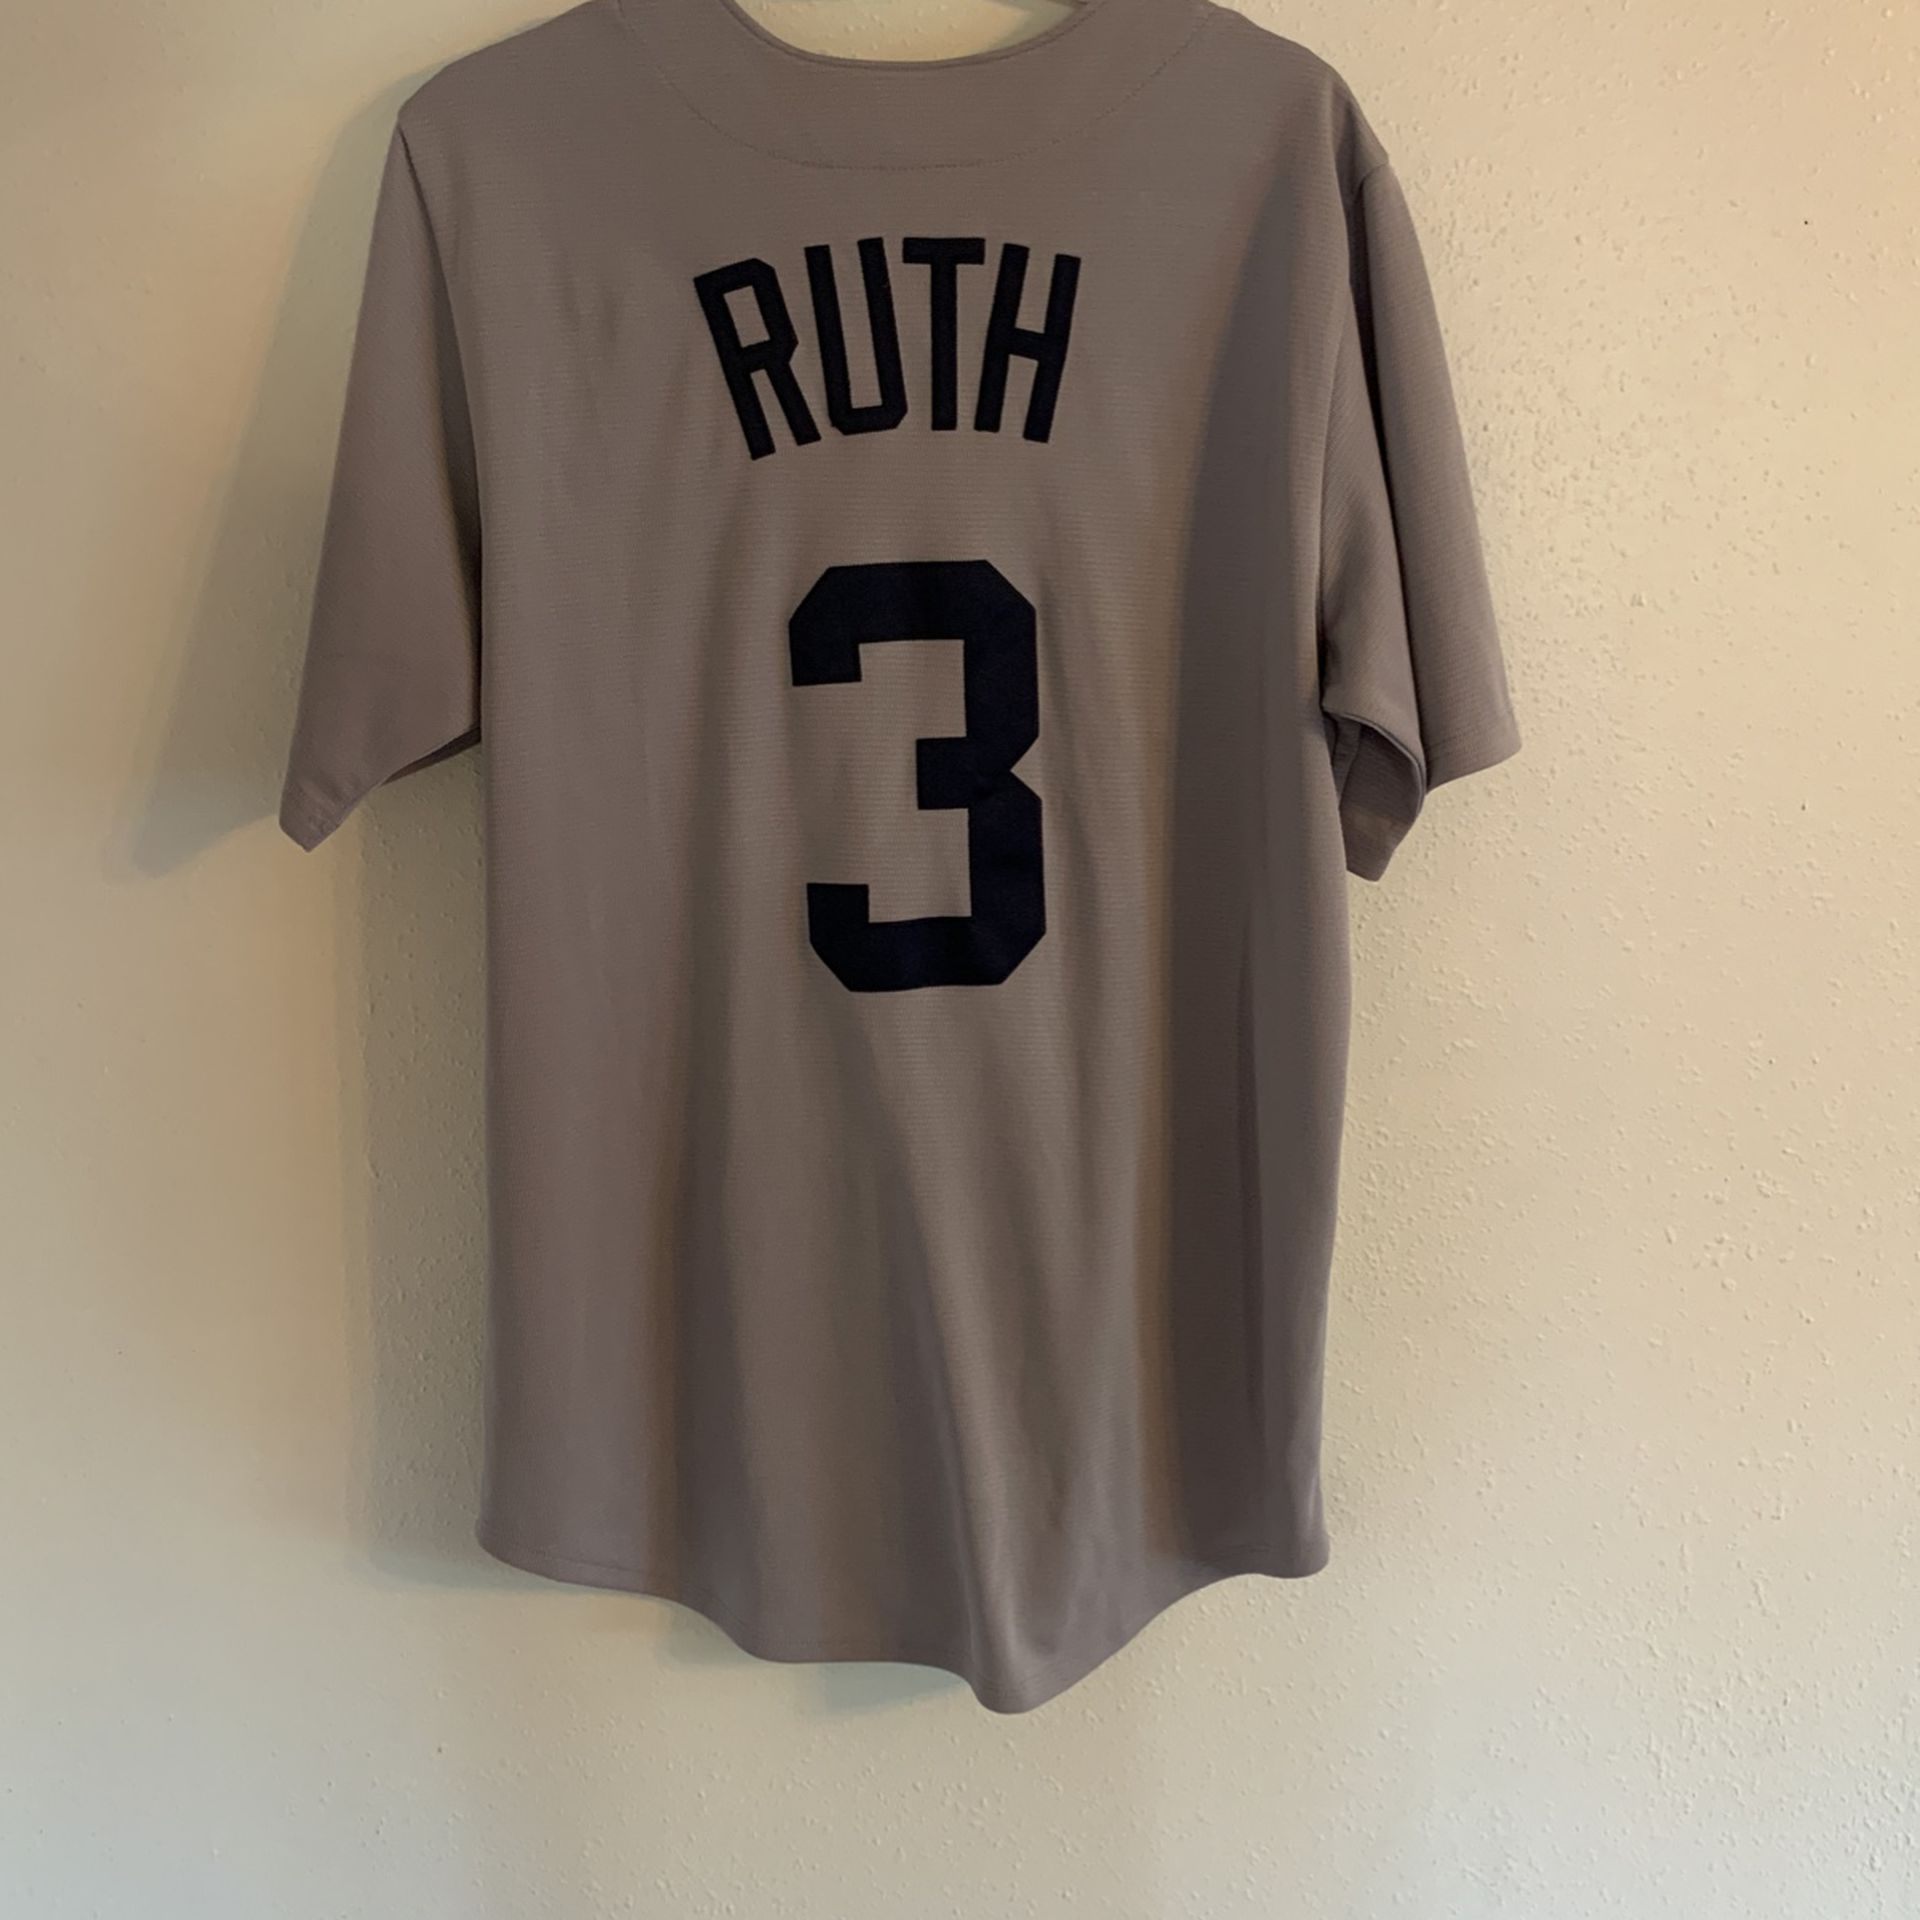 ruth jersey